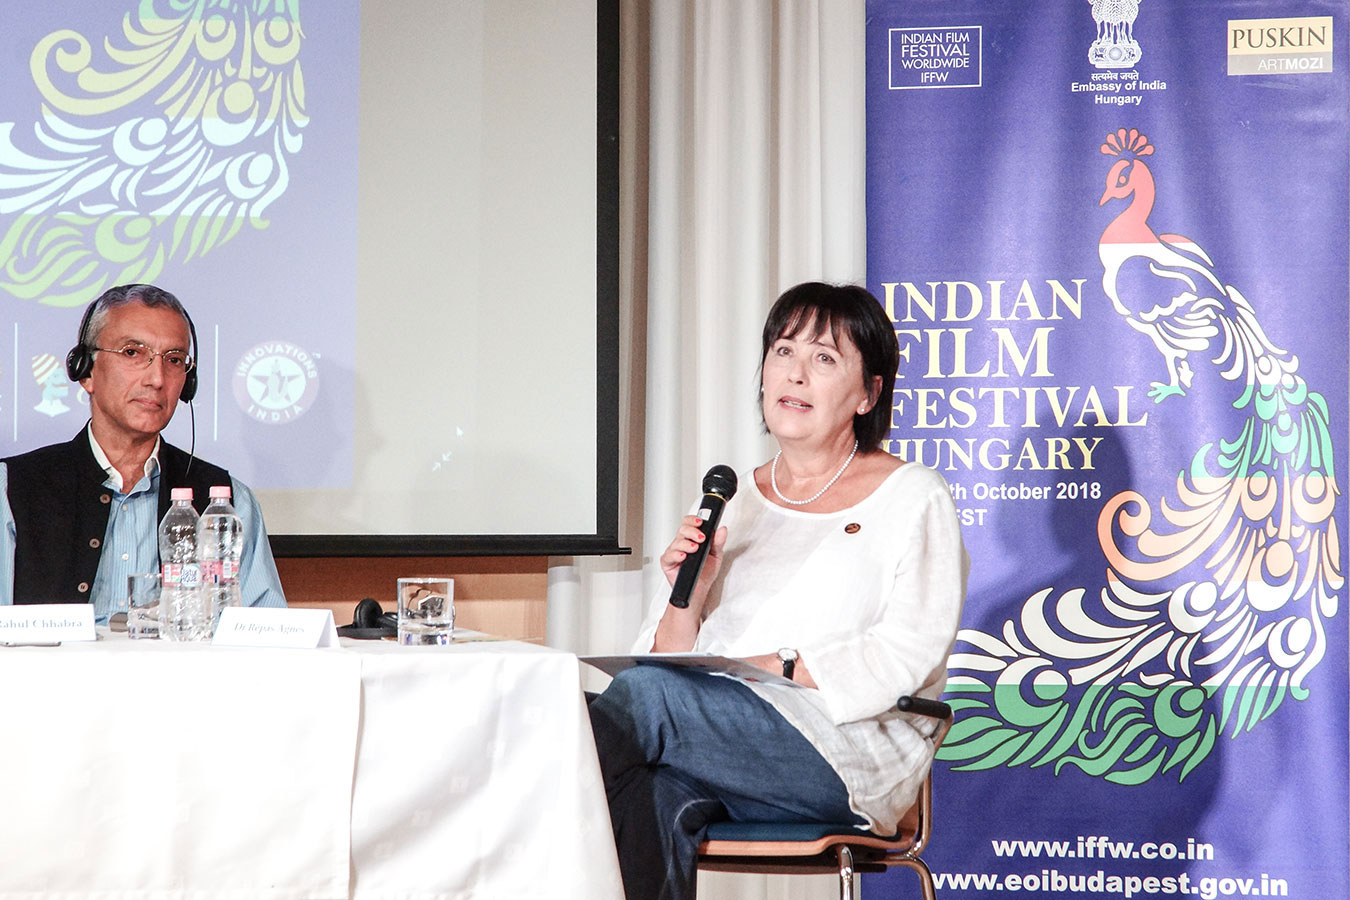 ind-indian-film-festival-2018-press-conference-dr-repas-agnes-budapest-film.jpg